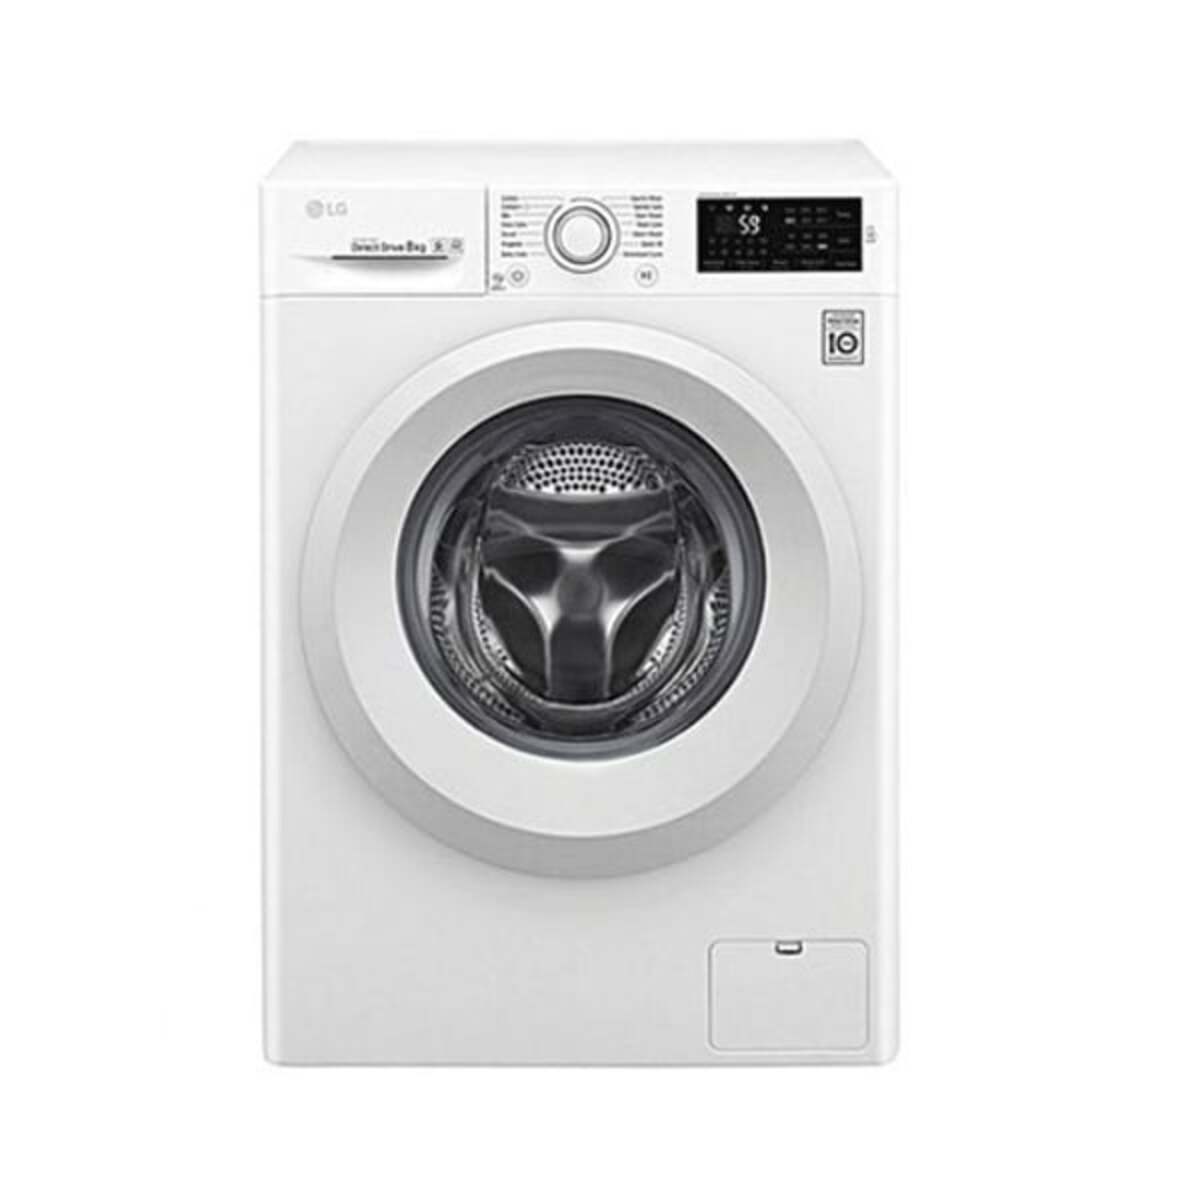 LG 8kg Front Washing Machine, Direct Drive Motor, 1200 Rpm, International Version, White, F4J5TNP3W